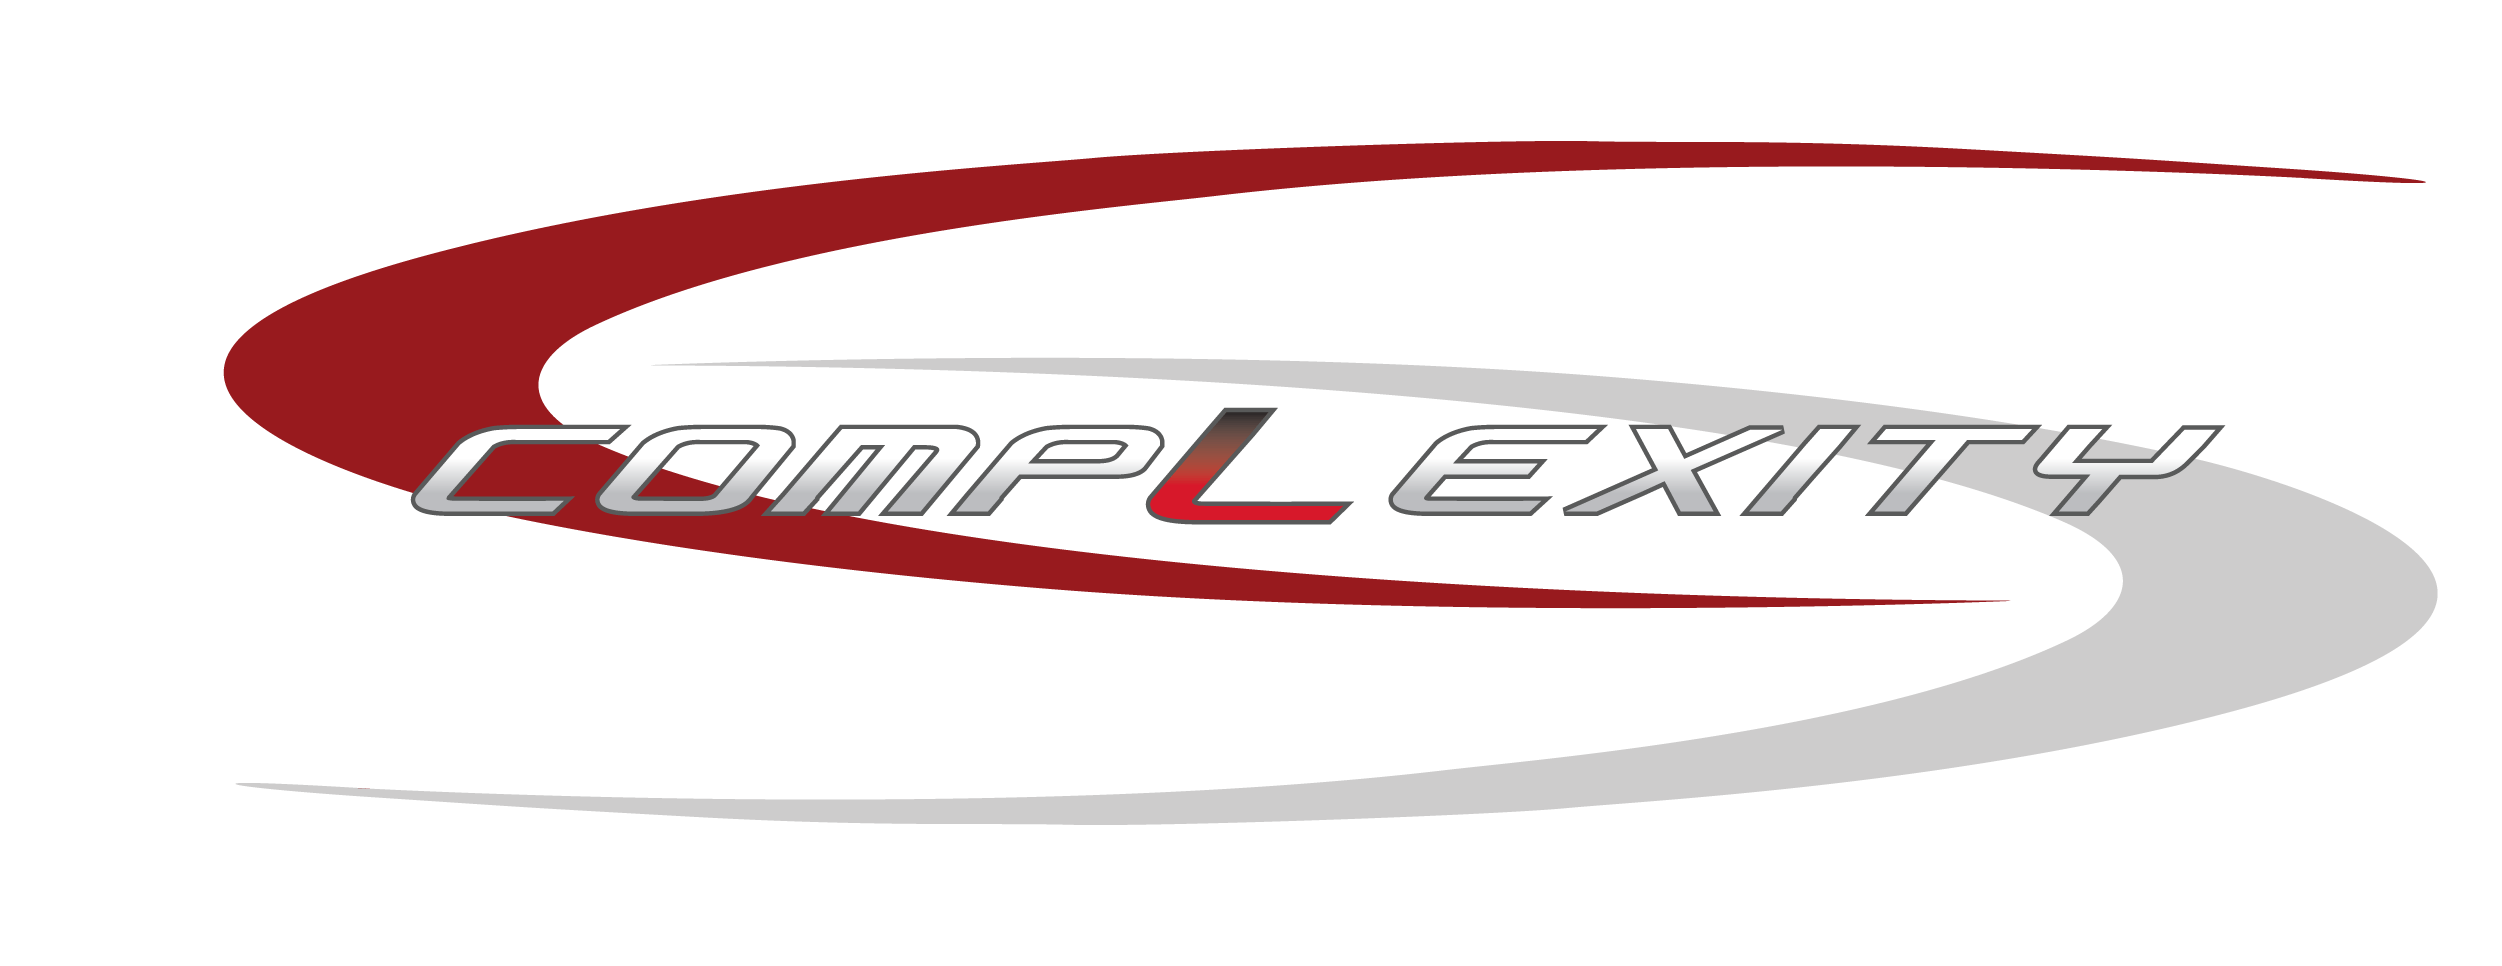 GameSpot Old Logo - CompLexity announces a new team for League of Legends - GameSpot